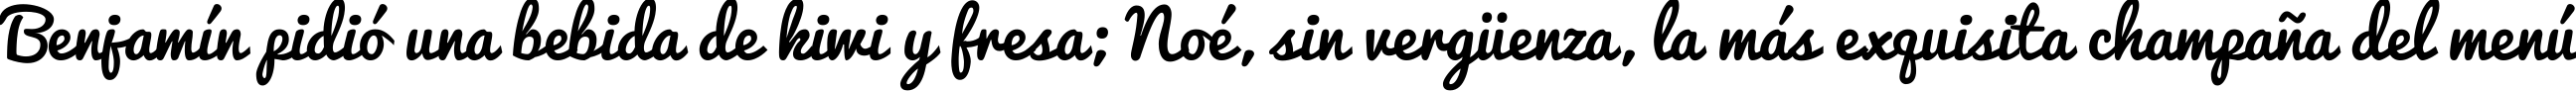 Пример написания шрифтом Pacifico Regular текста на испанском